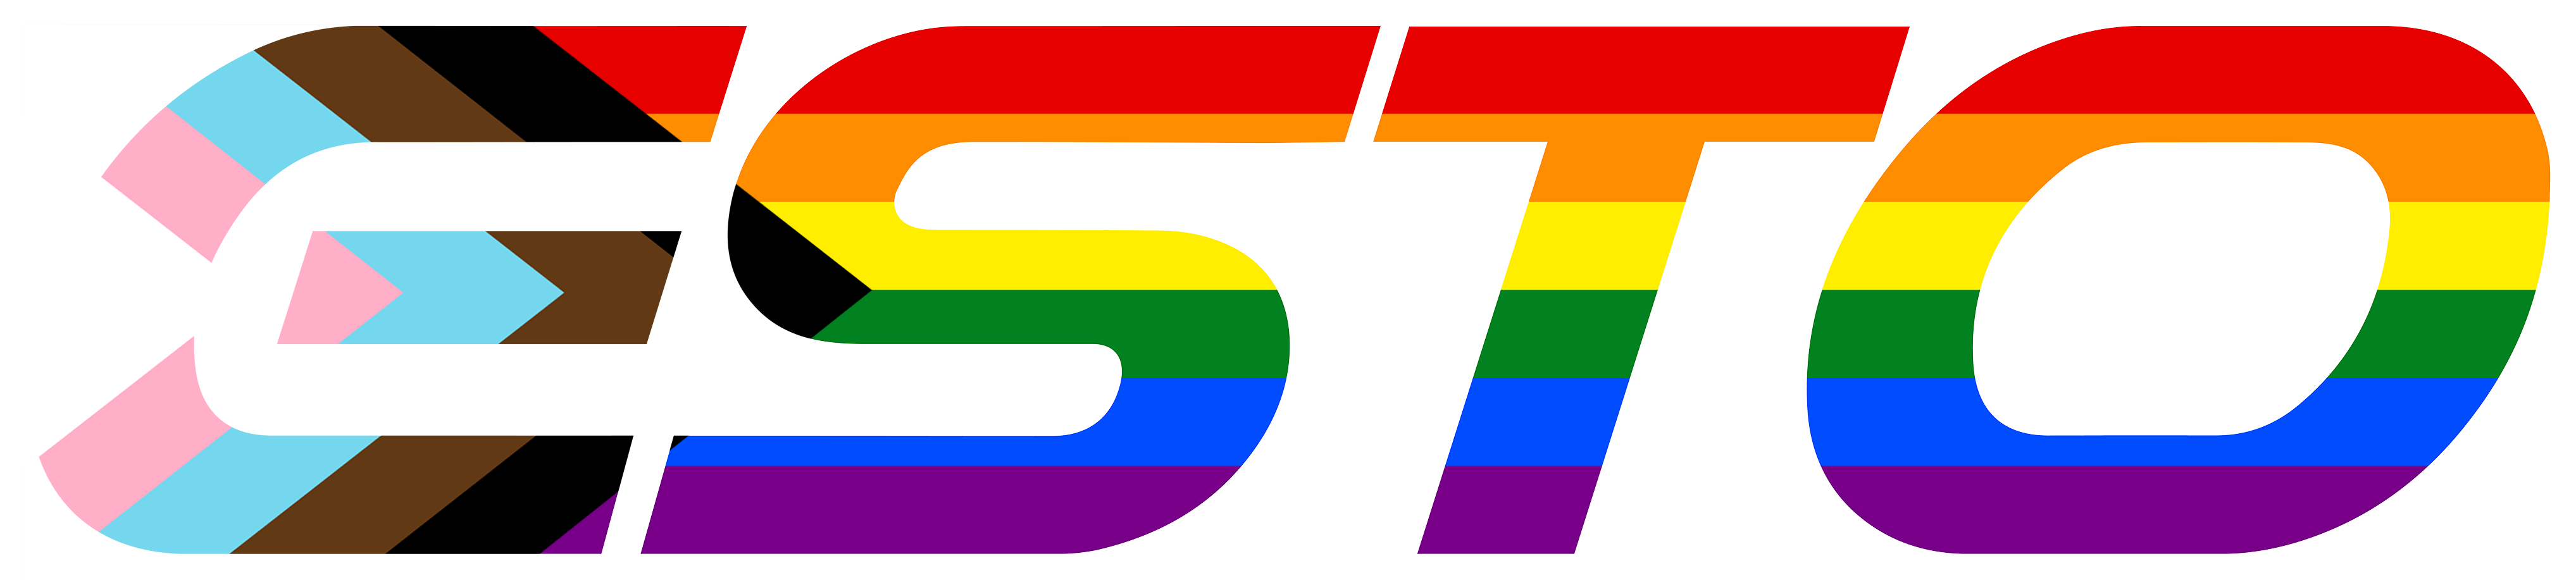 Image shows the ESTO logo with the "Progress Pride Flag" overlaid